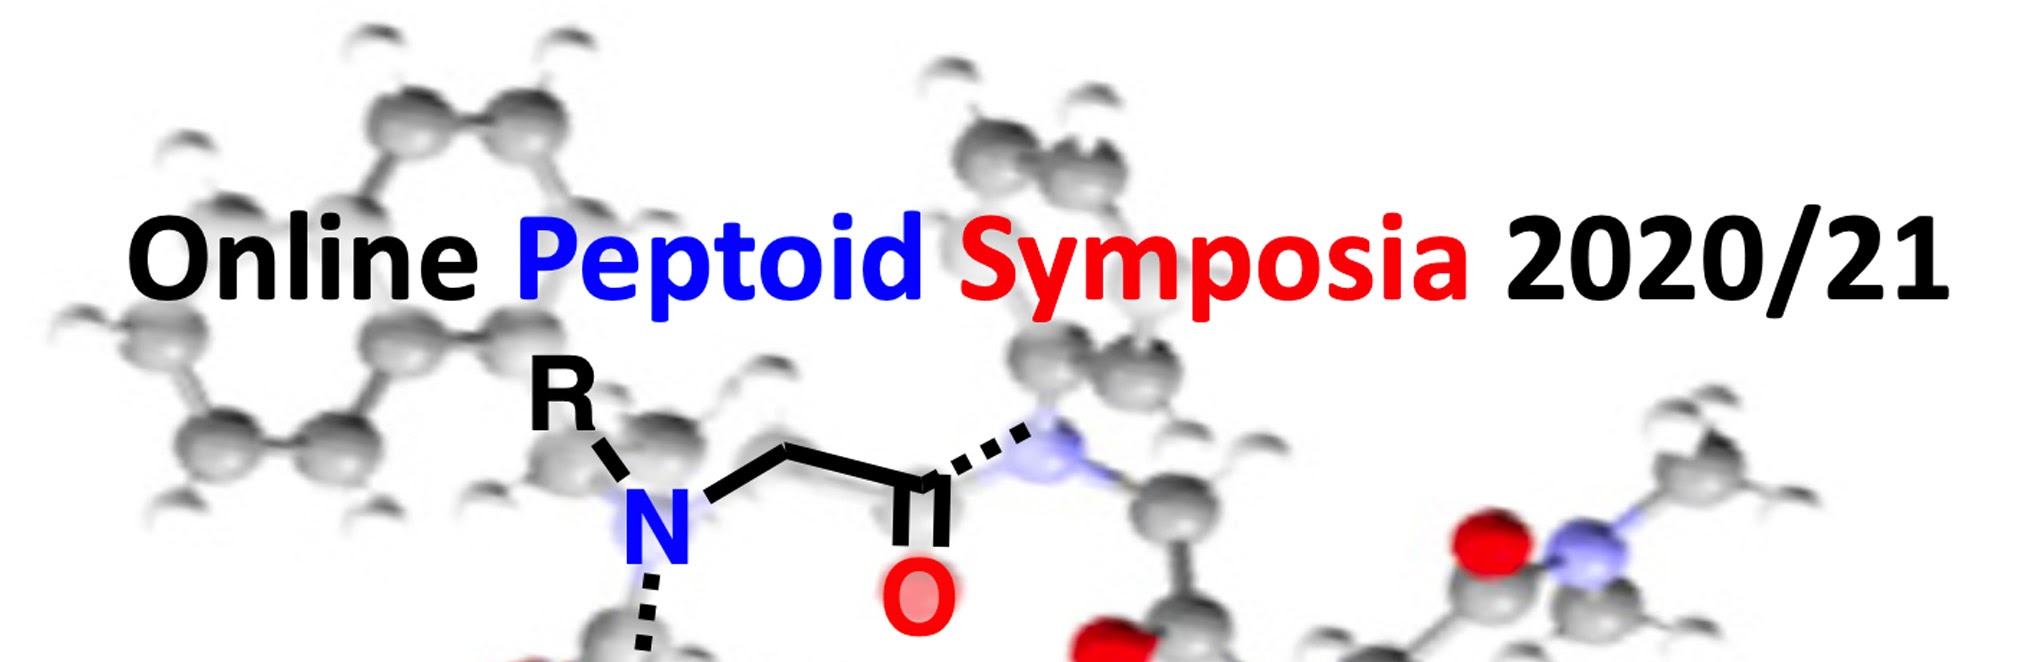 cartoon image of peptoid molecules